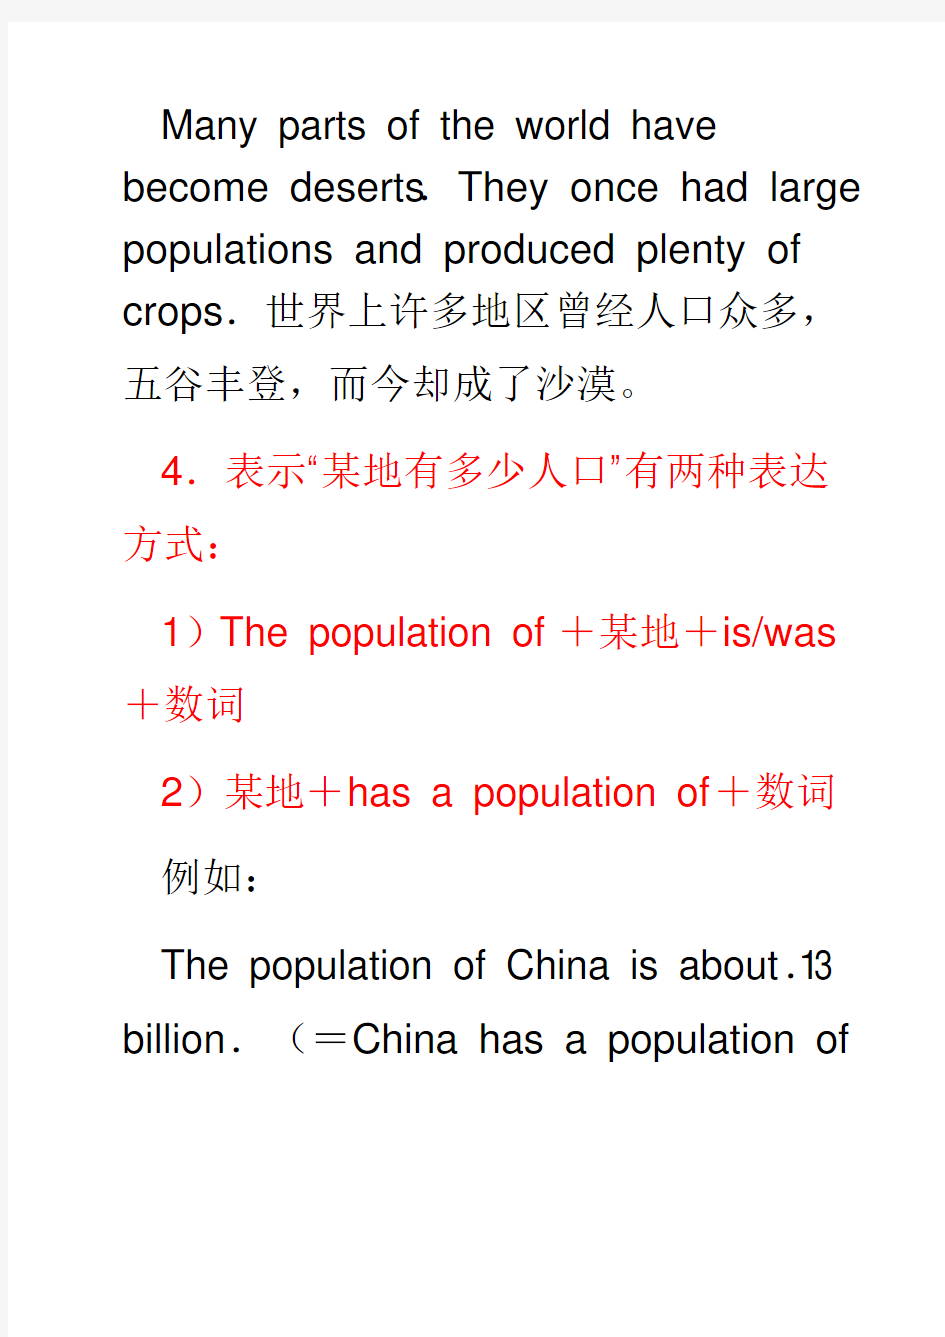 Population用法